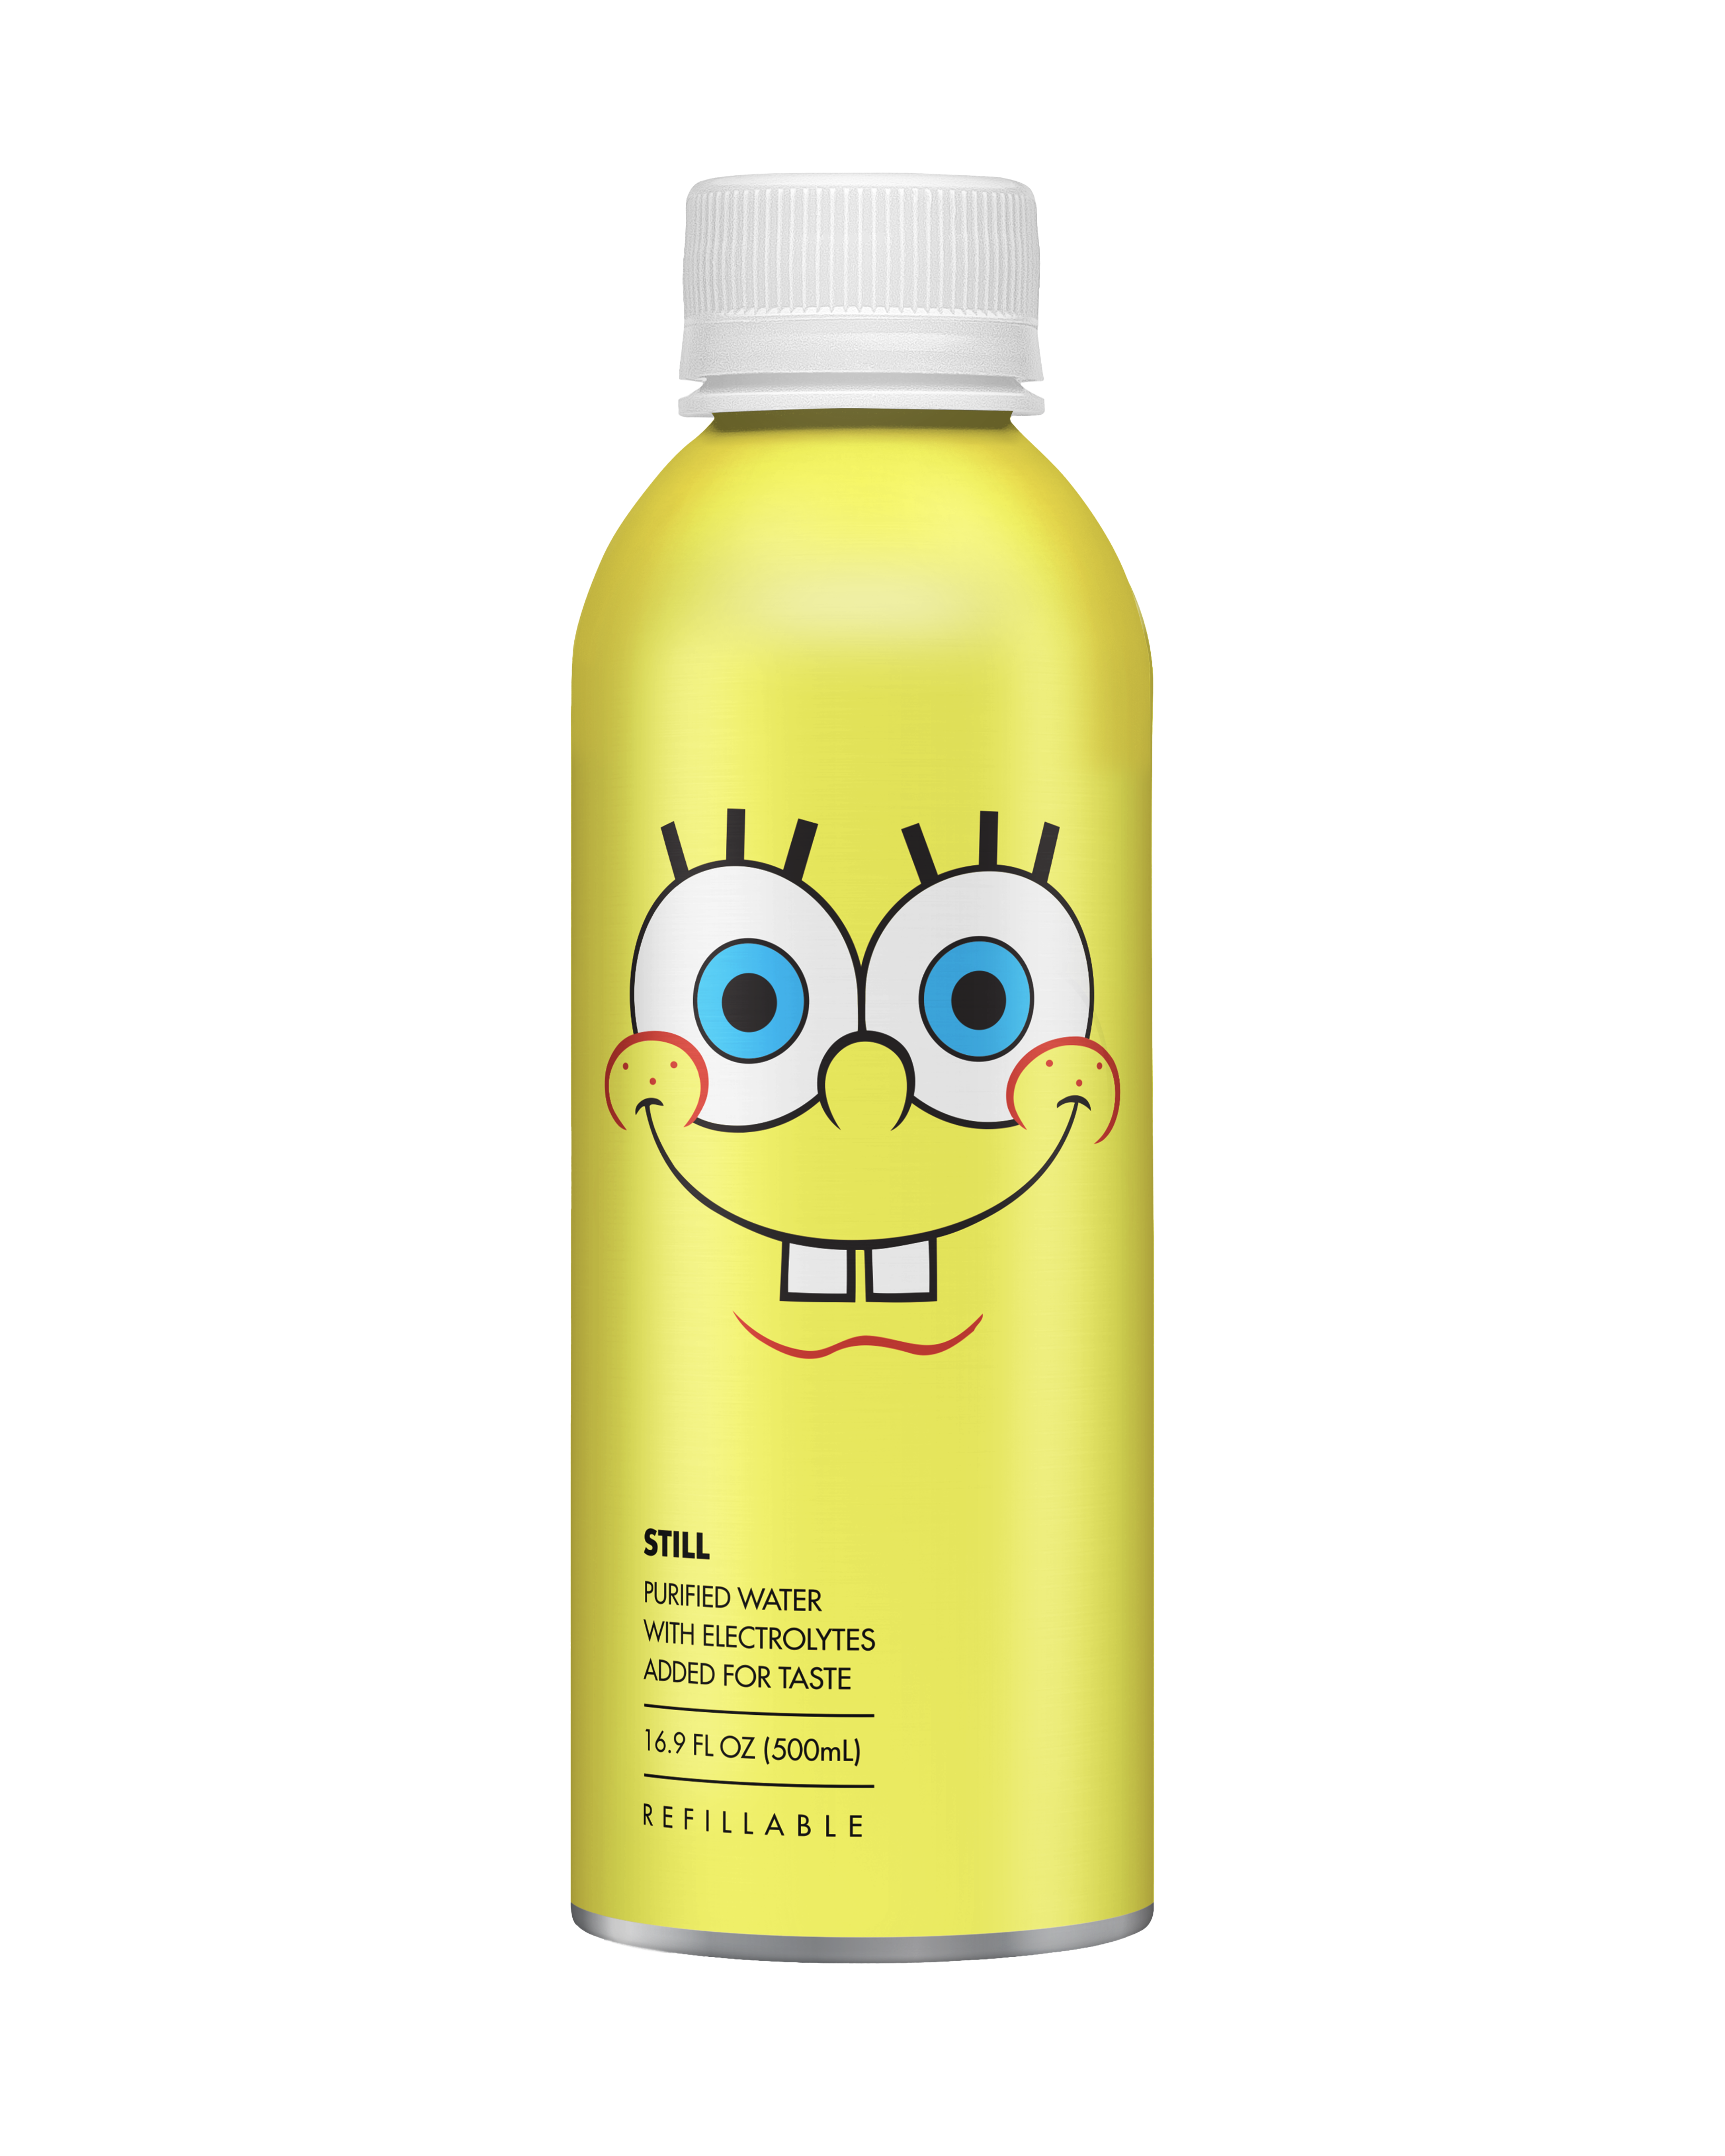 SpongeBob SquarePants inspired character water bottles